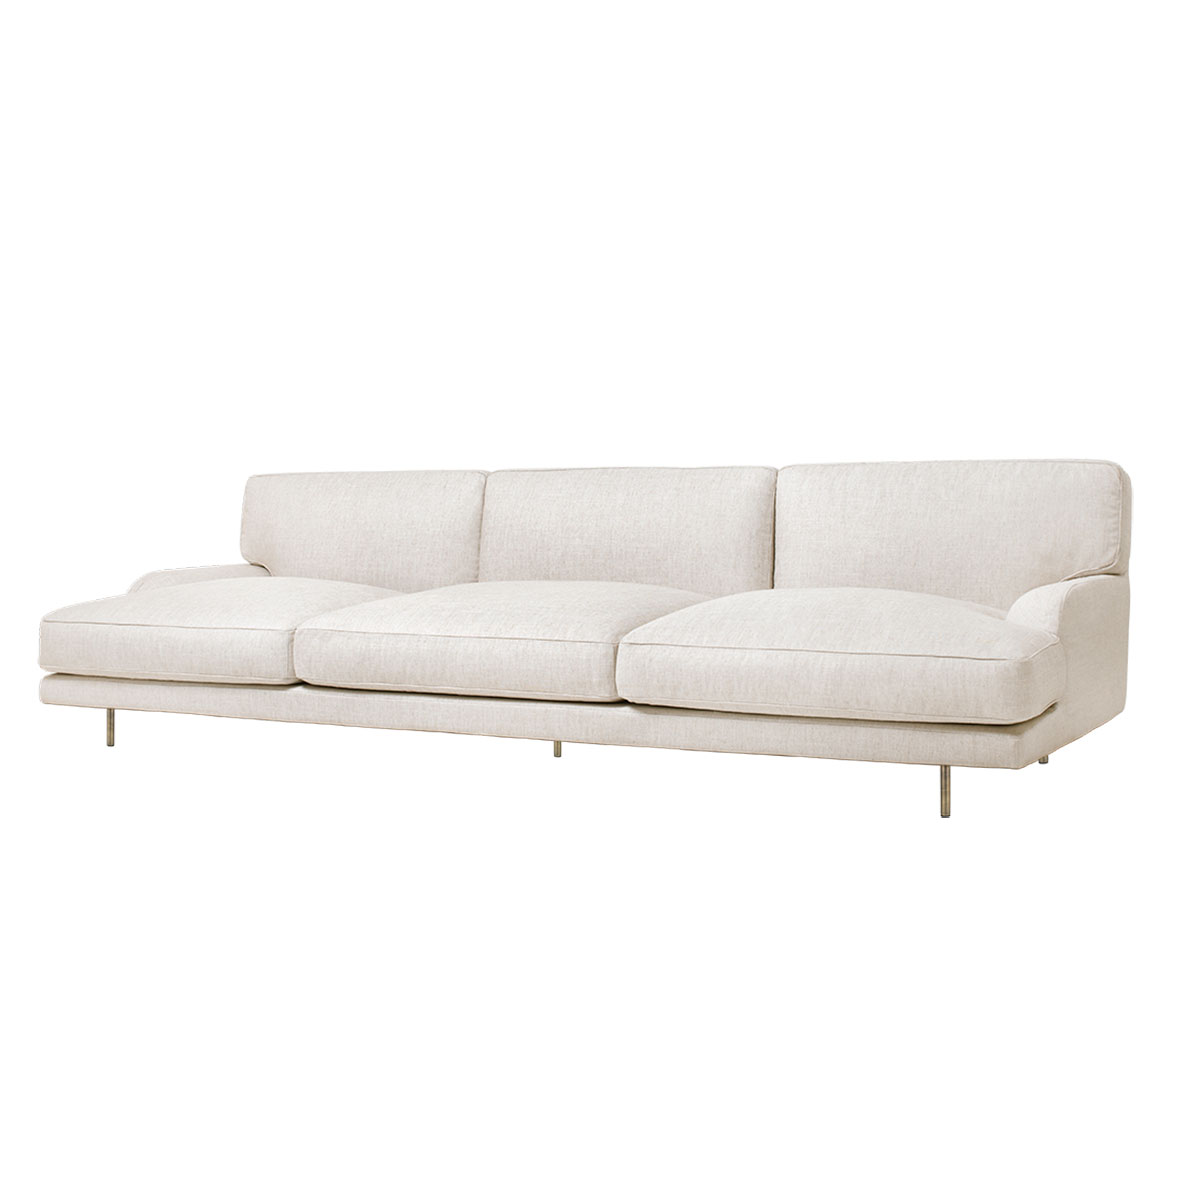 Hvit sofa med sorte ben og lave armlener